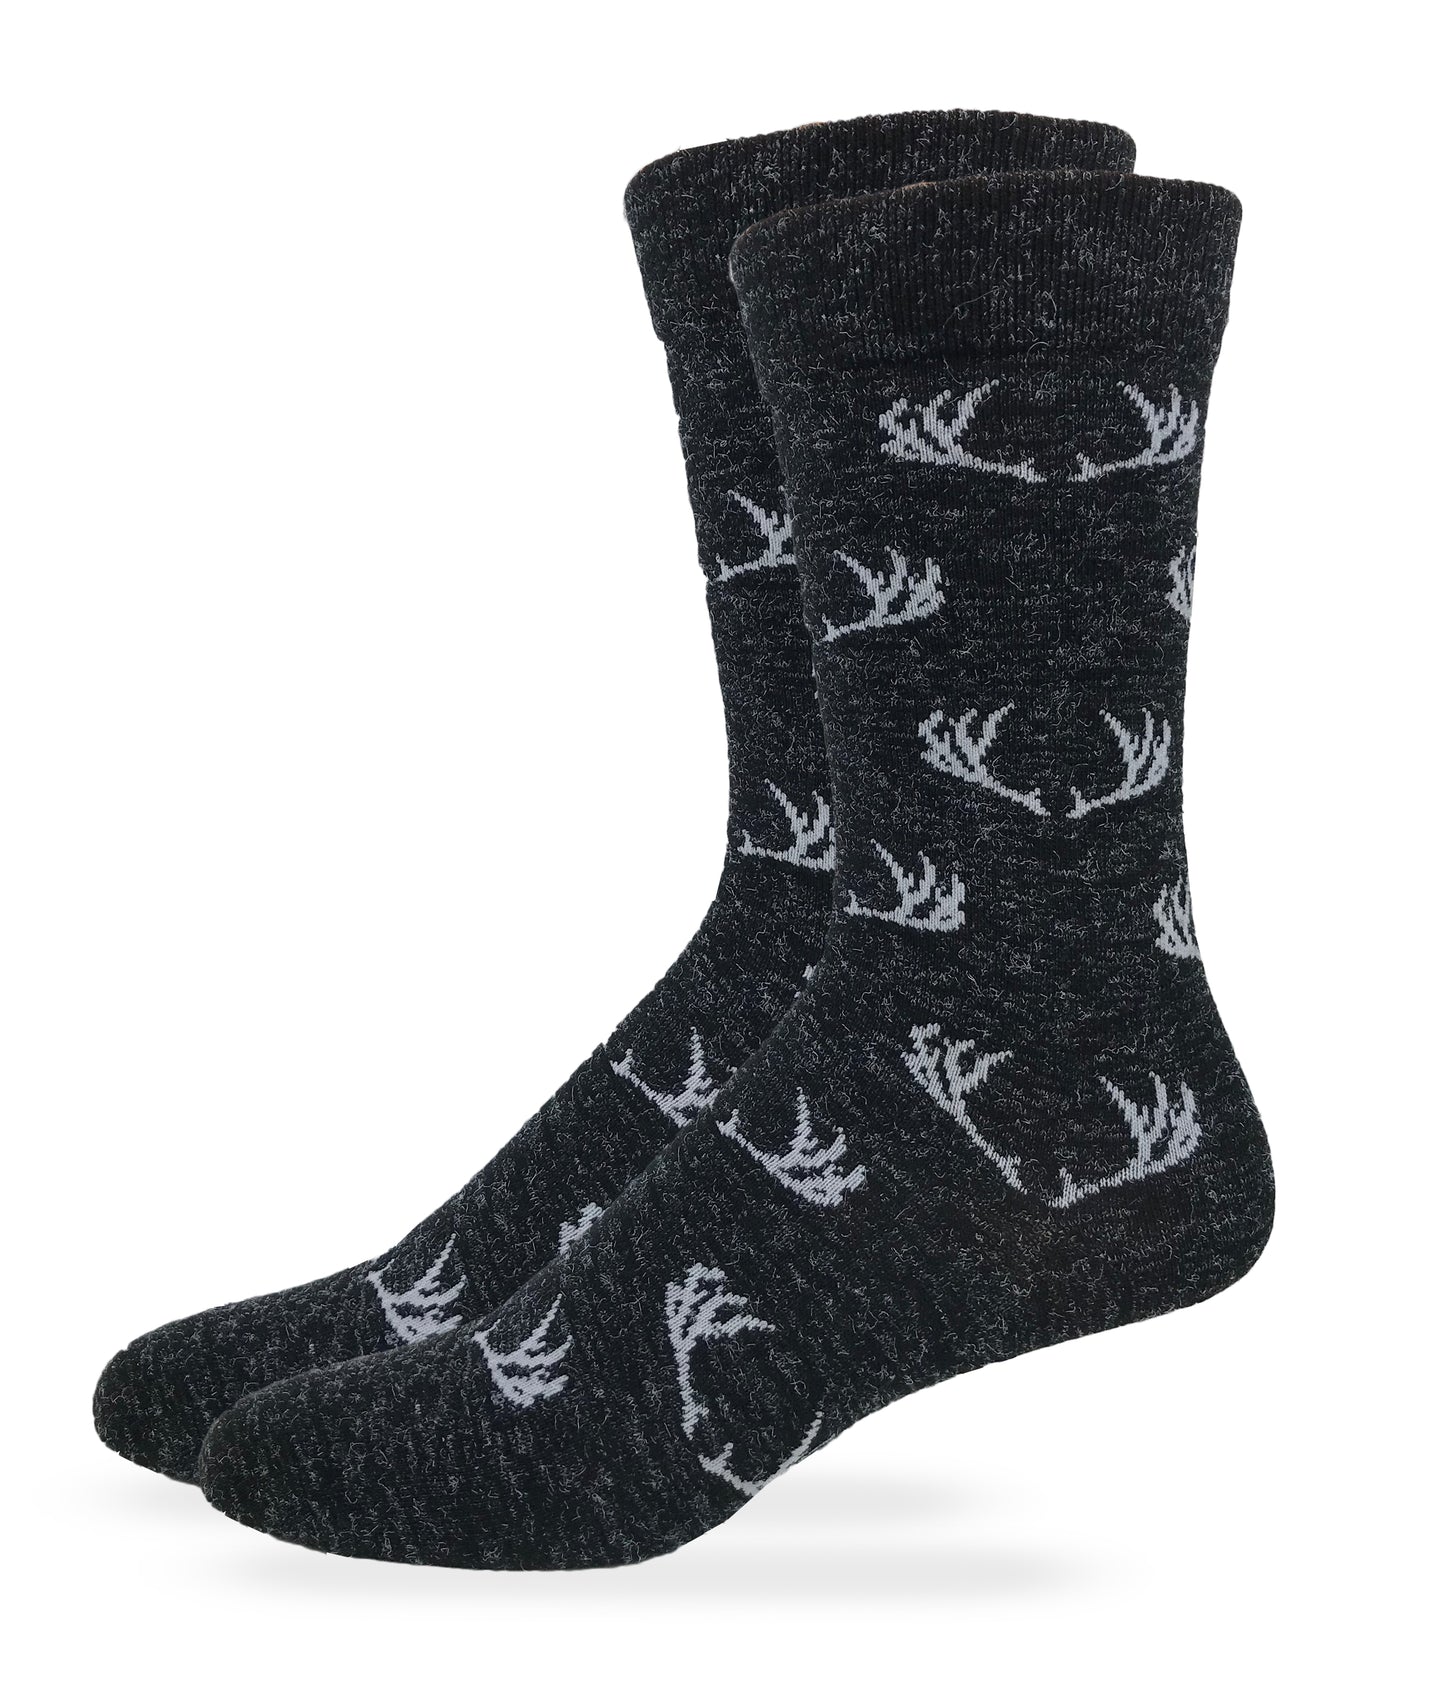 Outdoor Obsession Men's Animal Camo Pattern Dress Socks 1 Pair